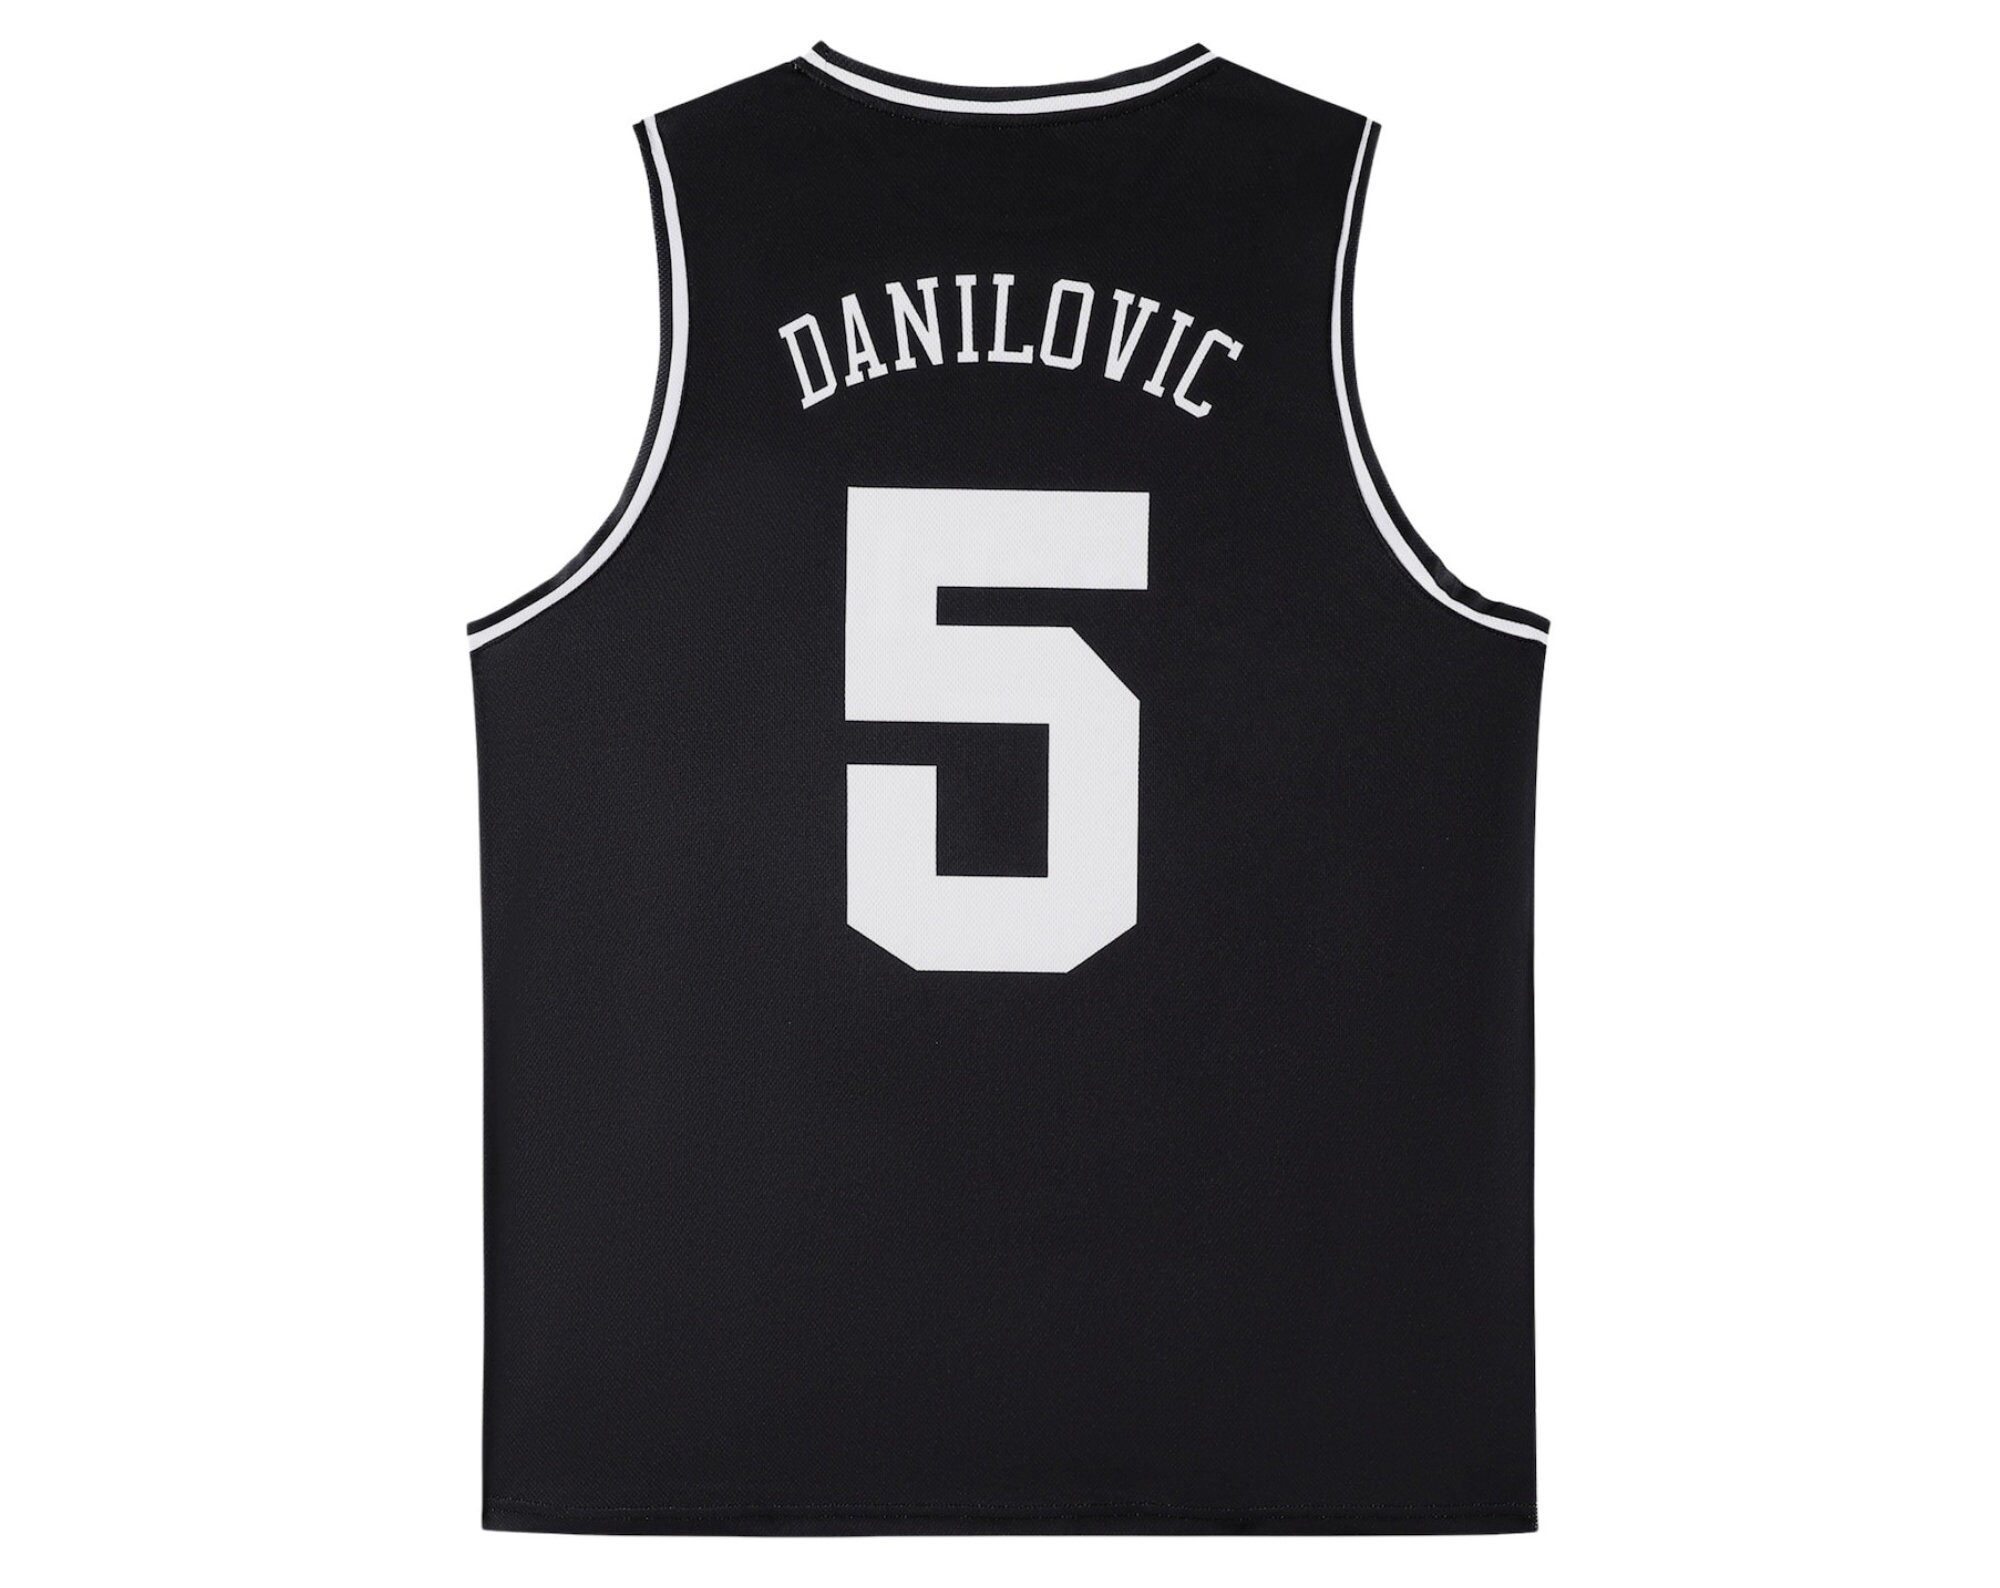 NBA star Bogdanovic is looking for Danilovic's daughter - Free Press